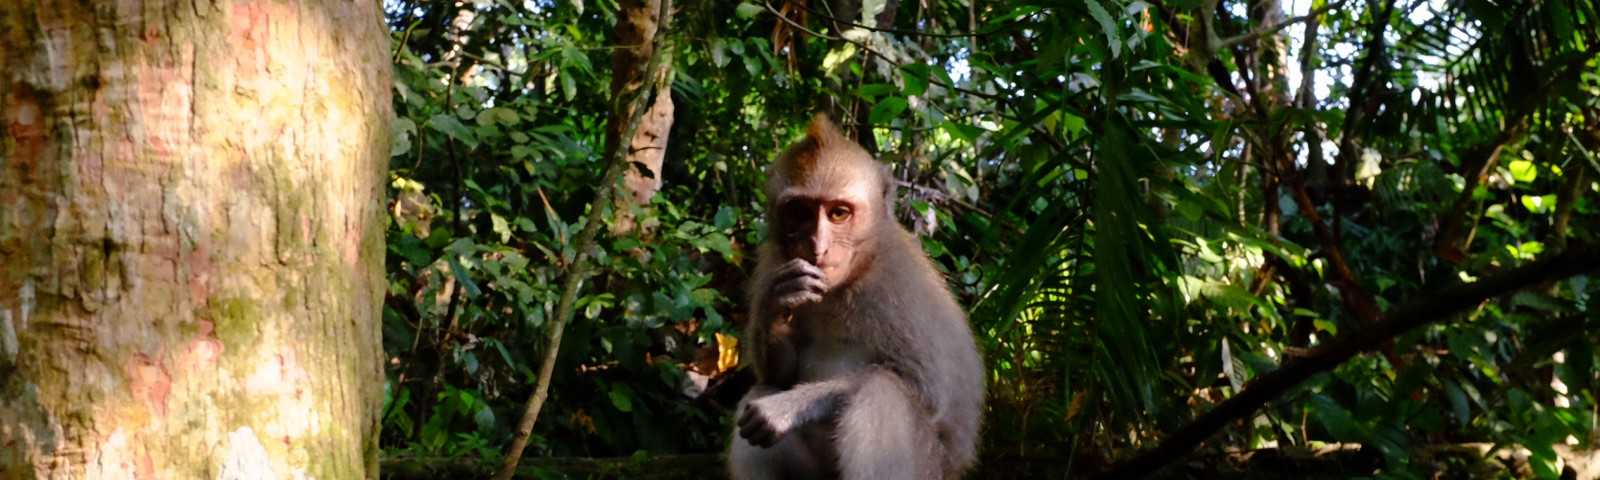 Лес обезьян на бали (и много - много фото обезьян). | блог жизнь с мечтой!
лес обезьян на бали (и много - много фото обезьян).